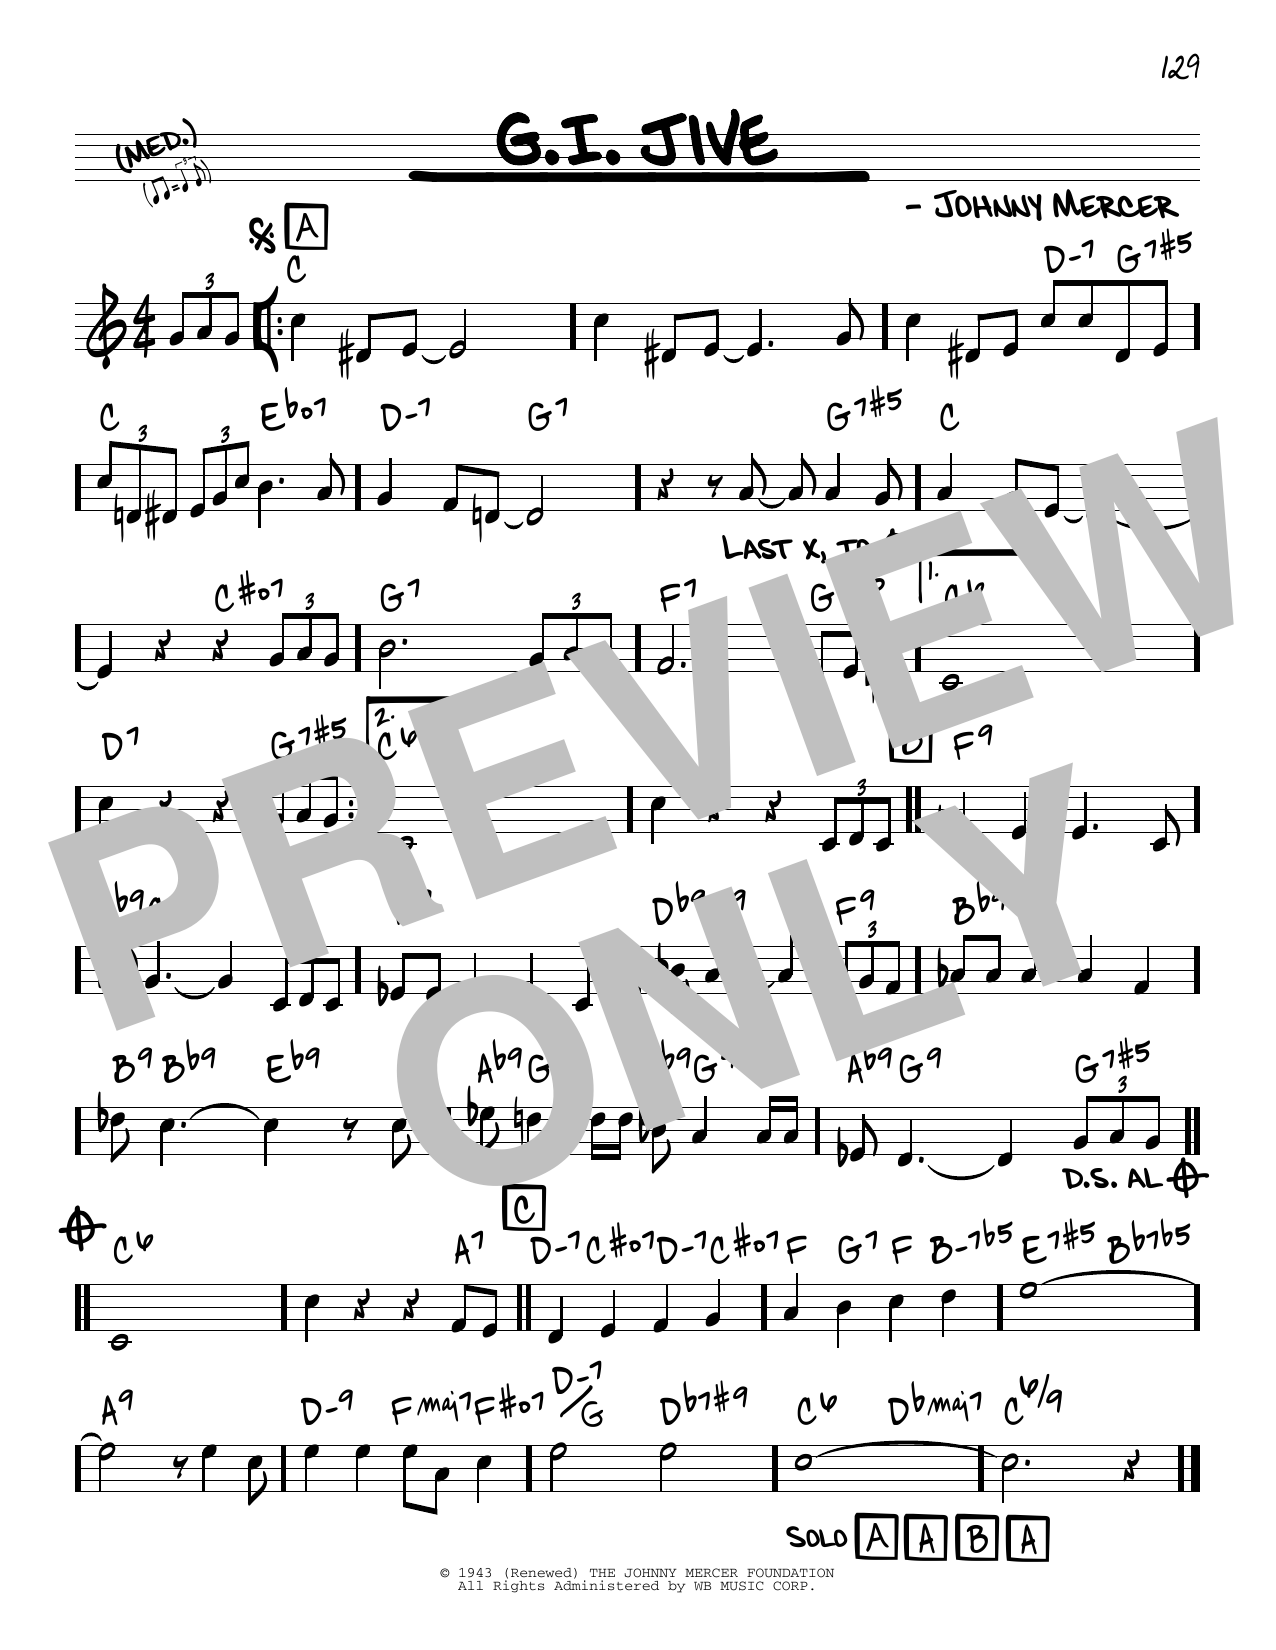 Johnny Mercer G.I. Jive Sheet Music Notes & Chords for Real Book – Melody & Chords - Download or Print PDF